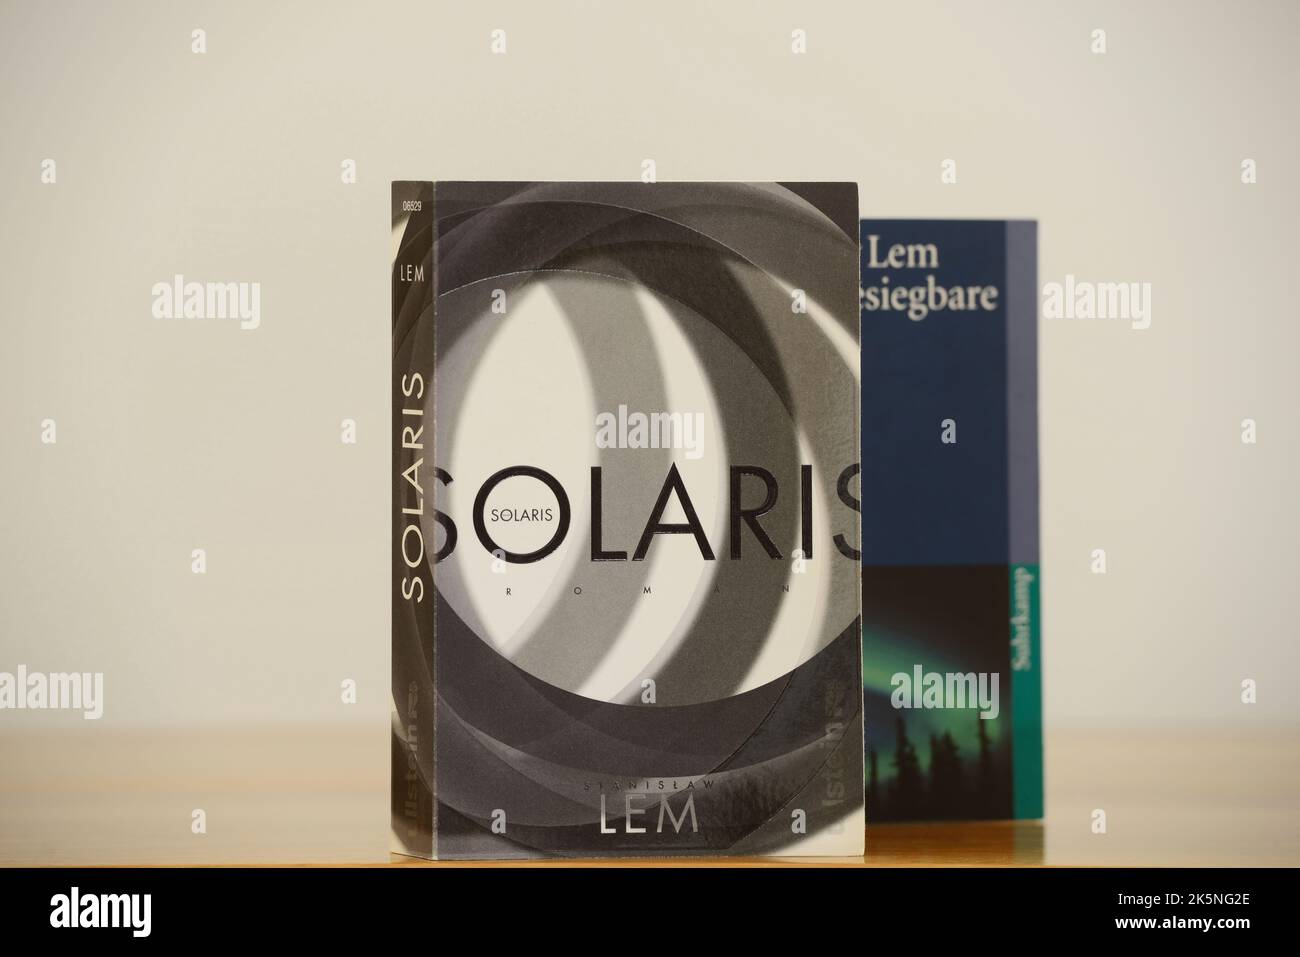 Solaris is a science fiction novel by Polish author Stanisław Lem Stock Photo